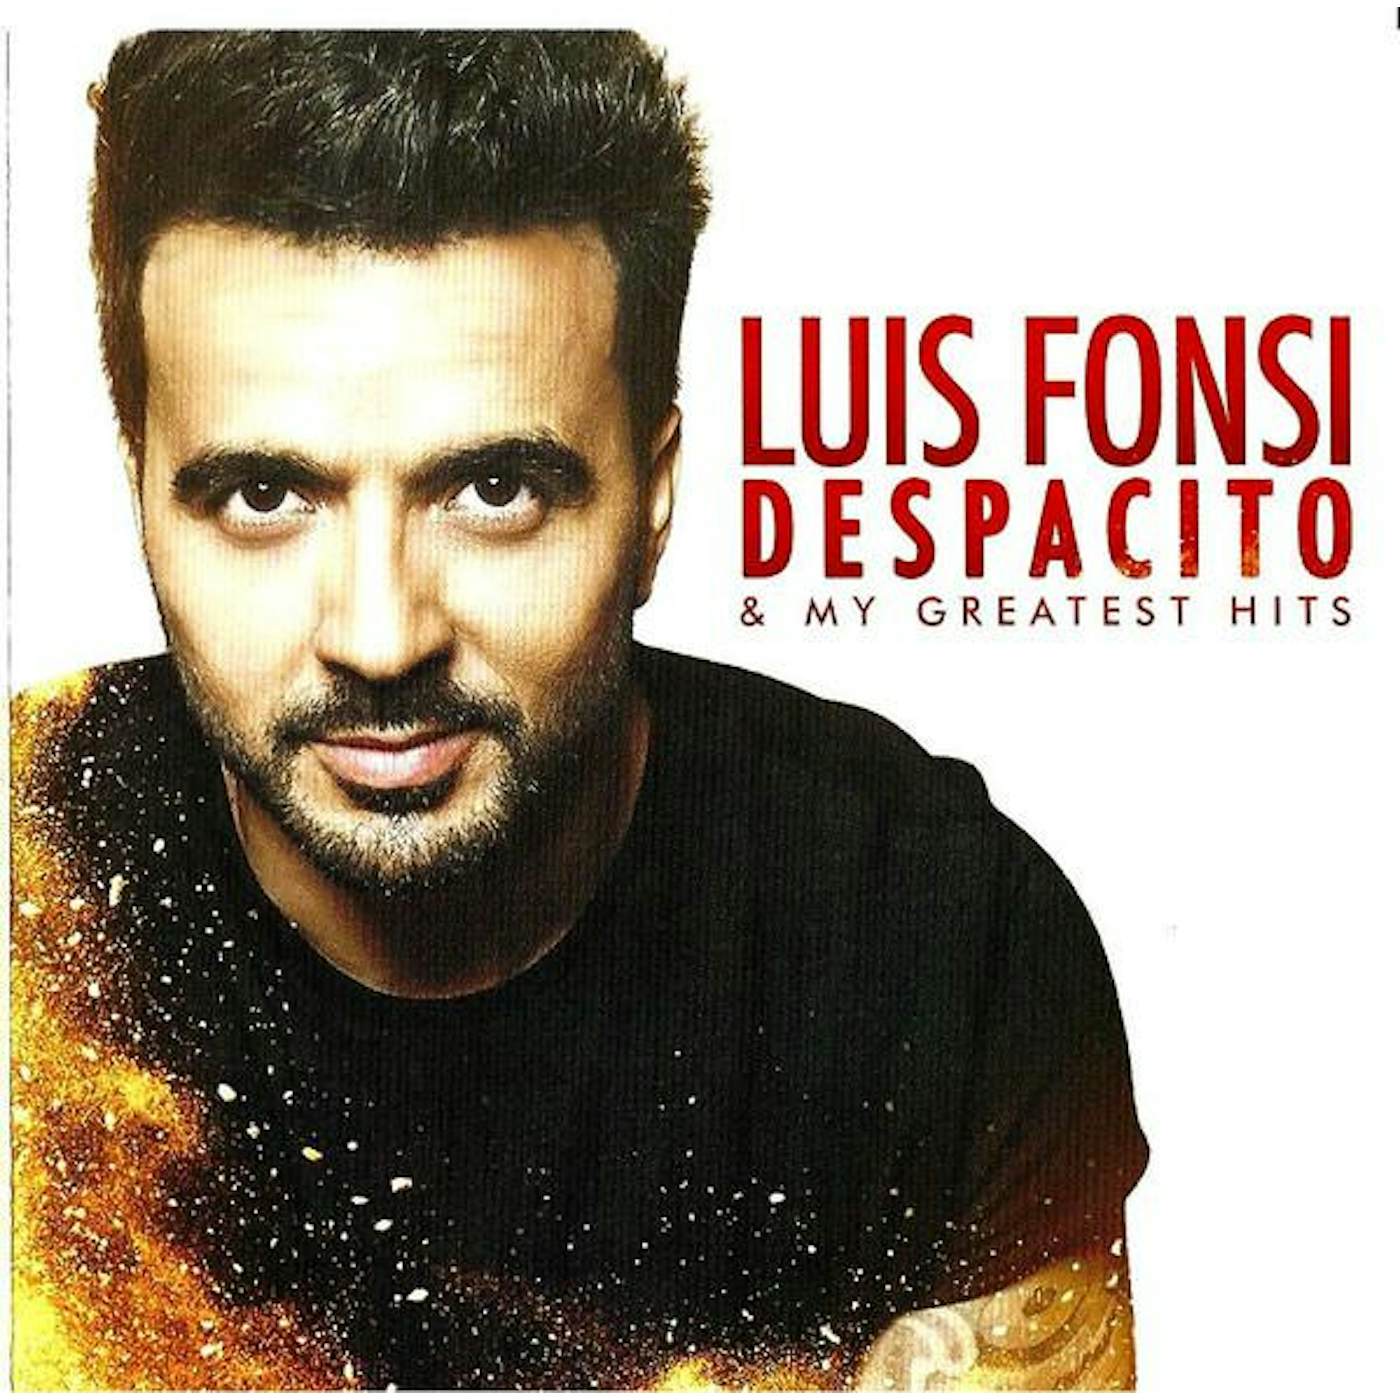 Luis Fonsi DESPACITO & MY GREATEST HITS CD